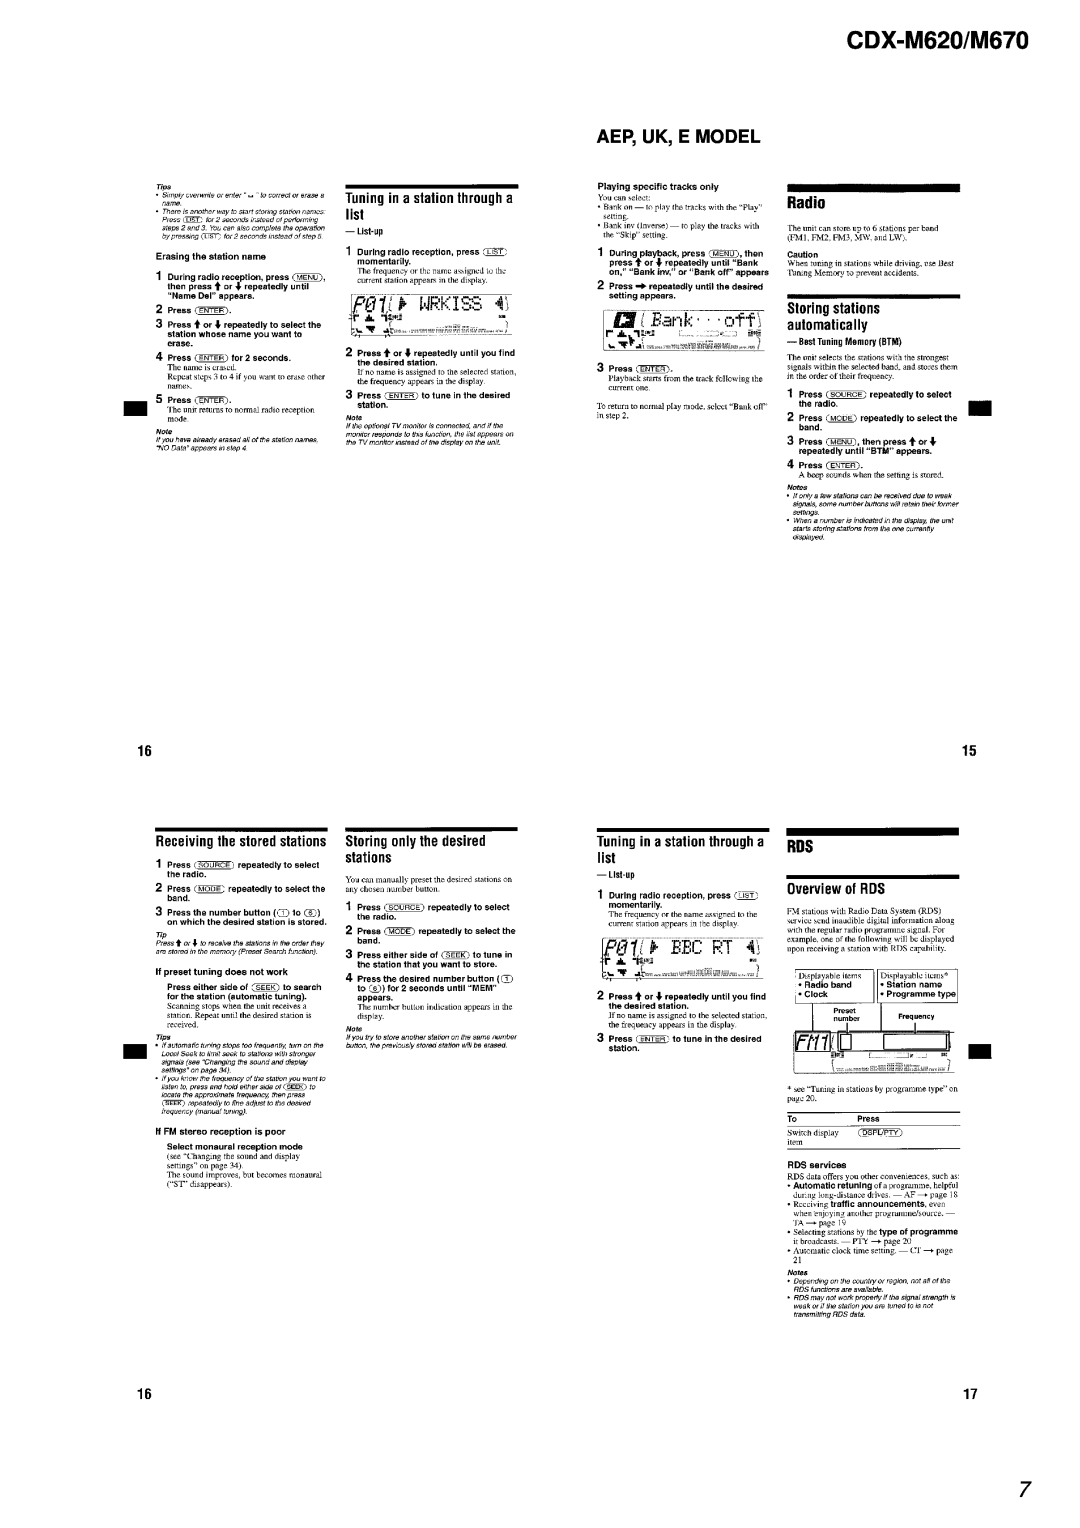 Sony Ericsson service manual Aep, Uk, E Model, CDX-M620/M670 